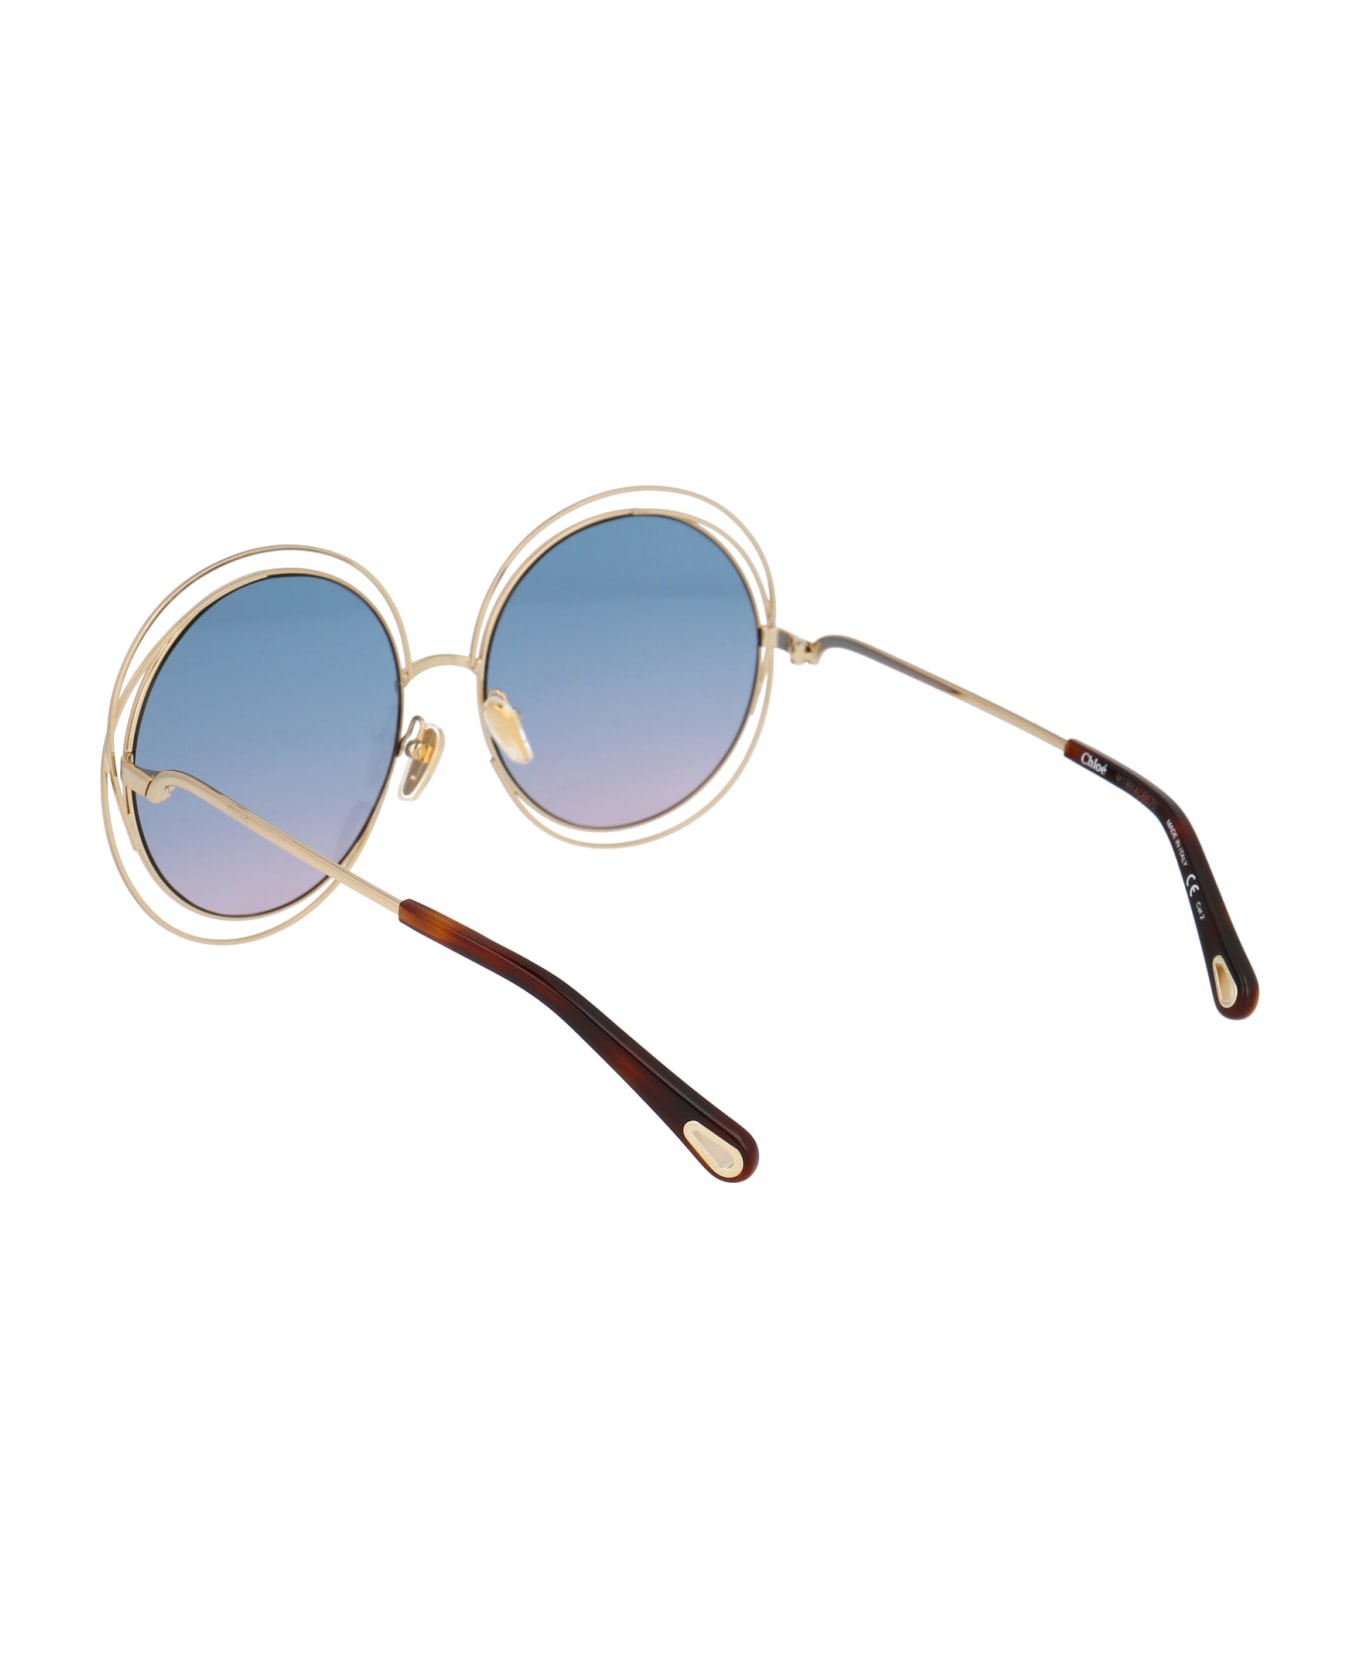 Chloé Eyewear Ch0045s Sunglasses - 003 GOLD GOLD BLUE